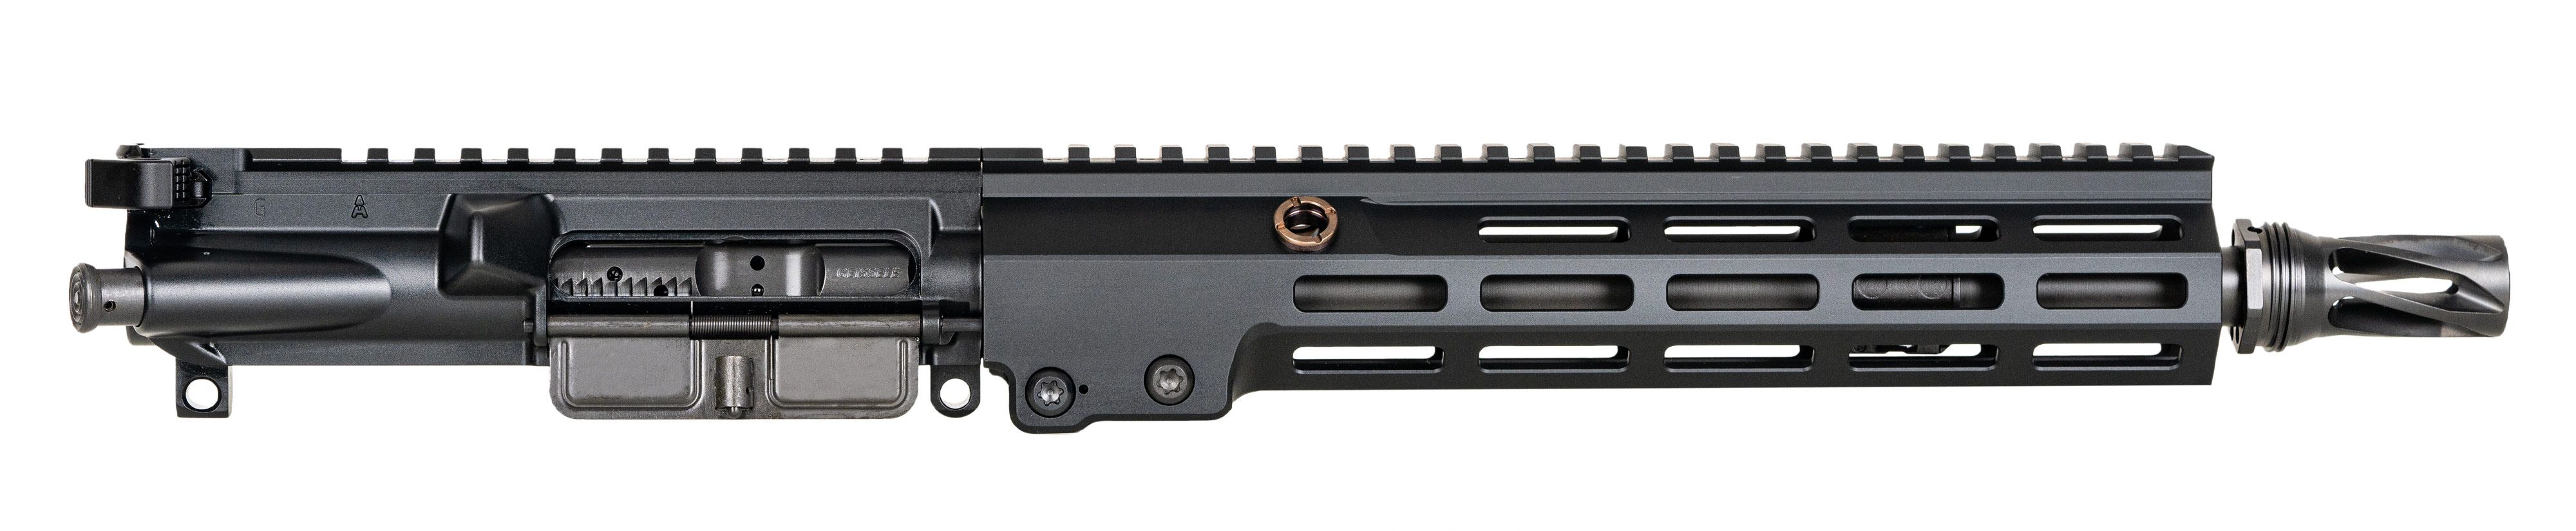 Geissele Super Duty MOD1 Complete Upper, 11.5, 5.56mm - Black